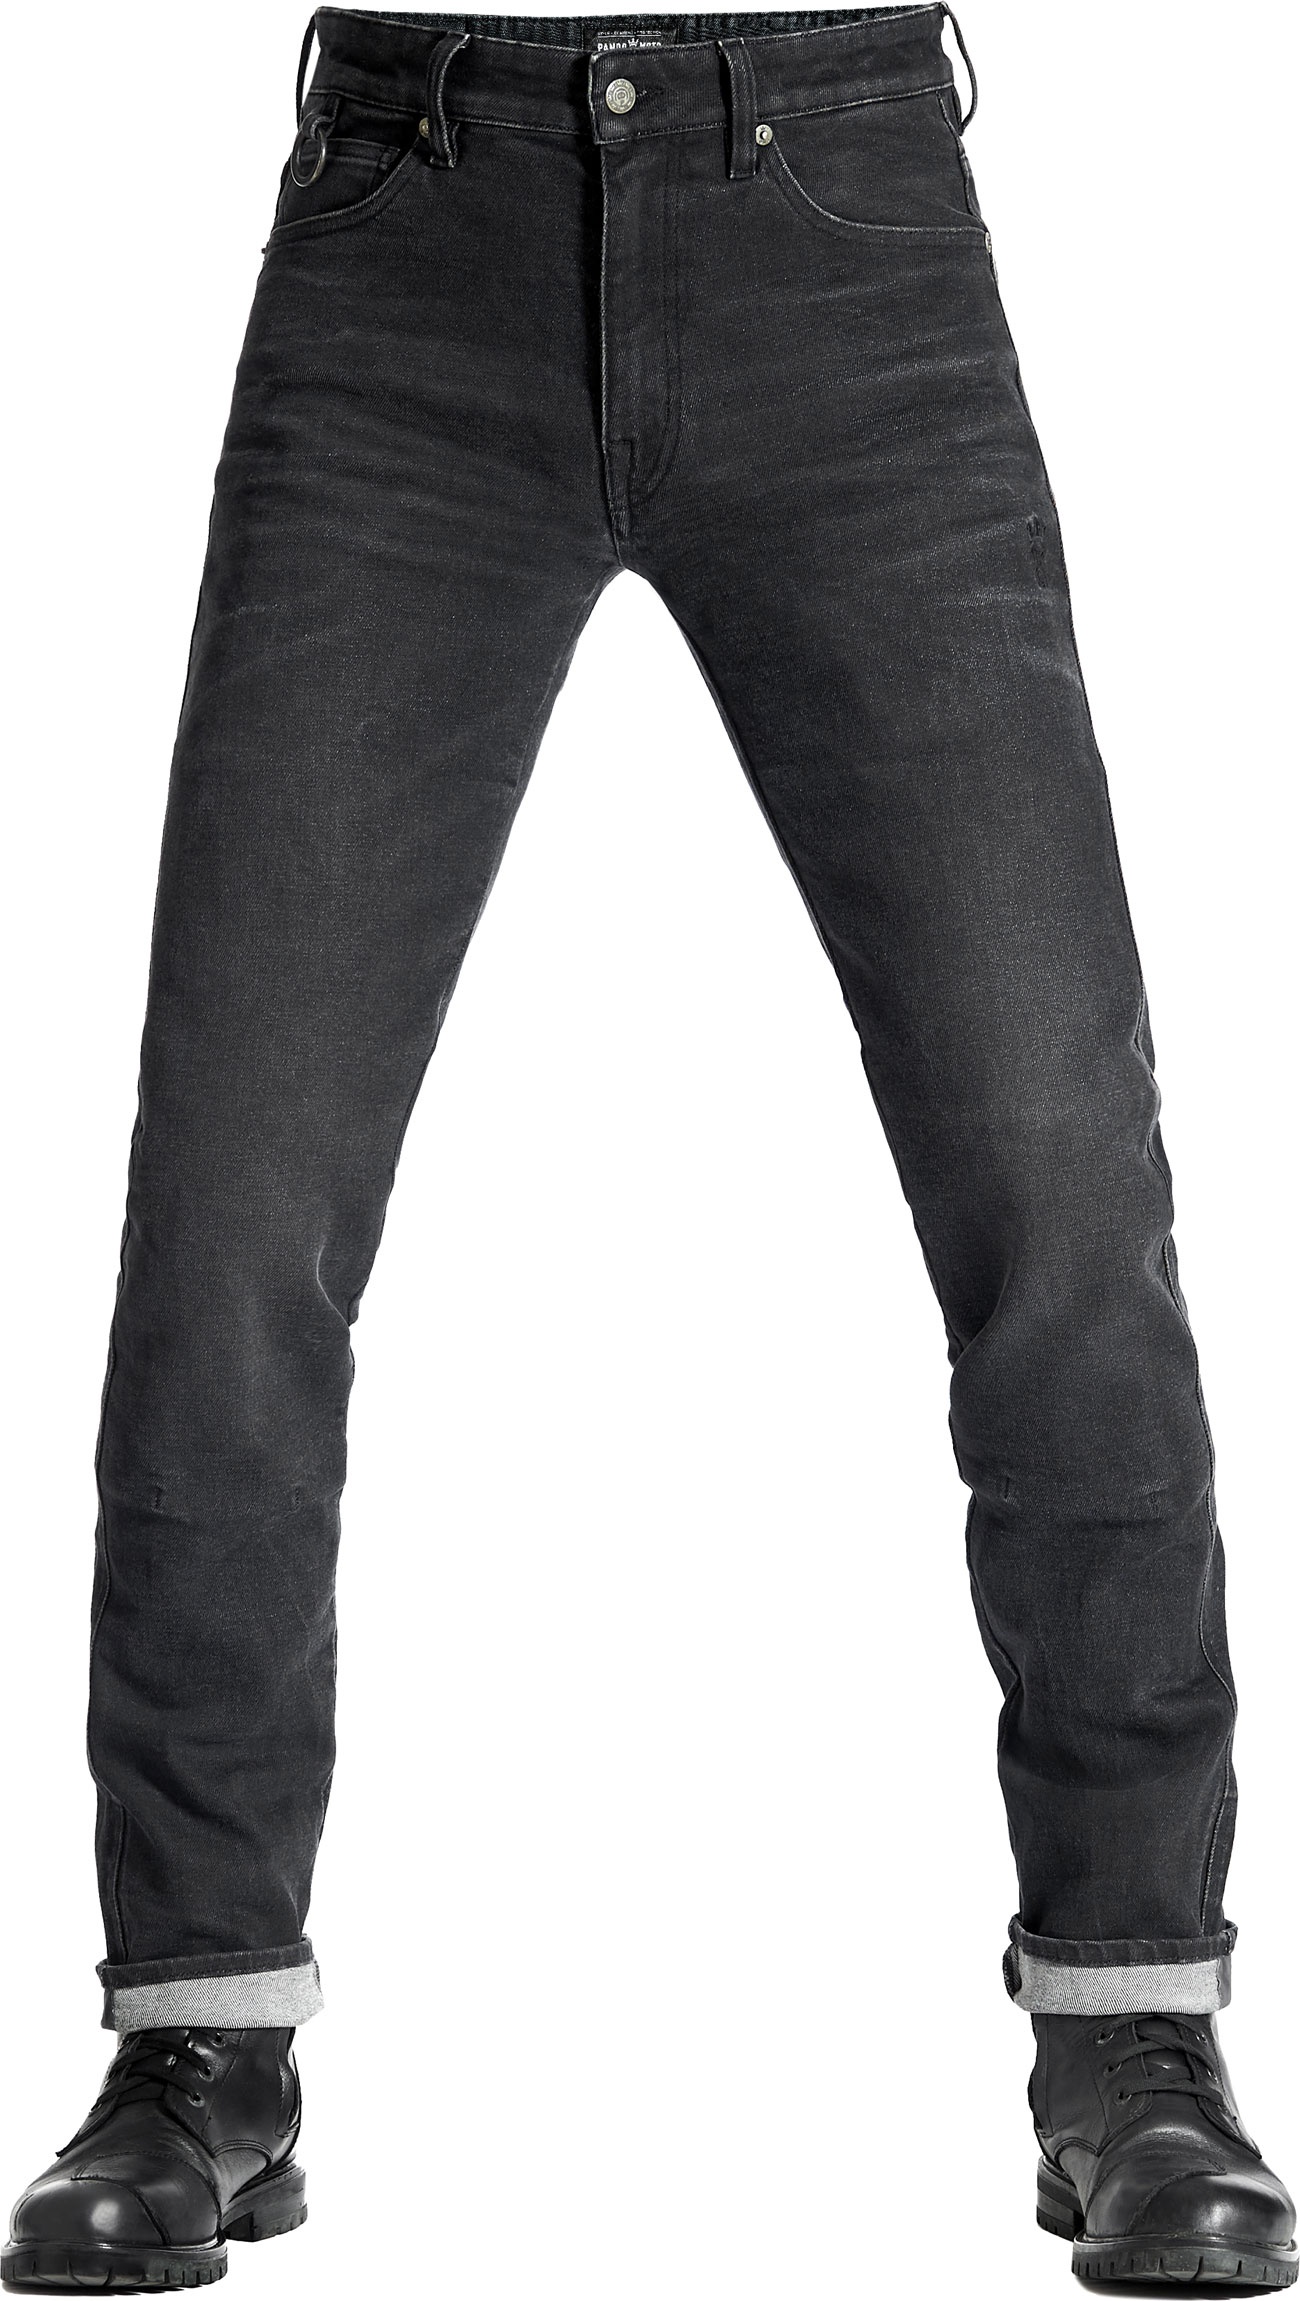 Pando Moto Robby Arm 01, jeans - Noir - W31/L34